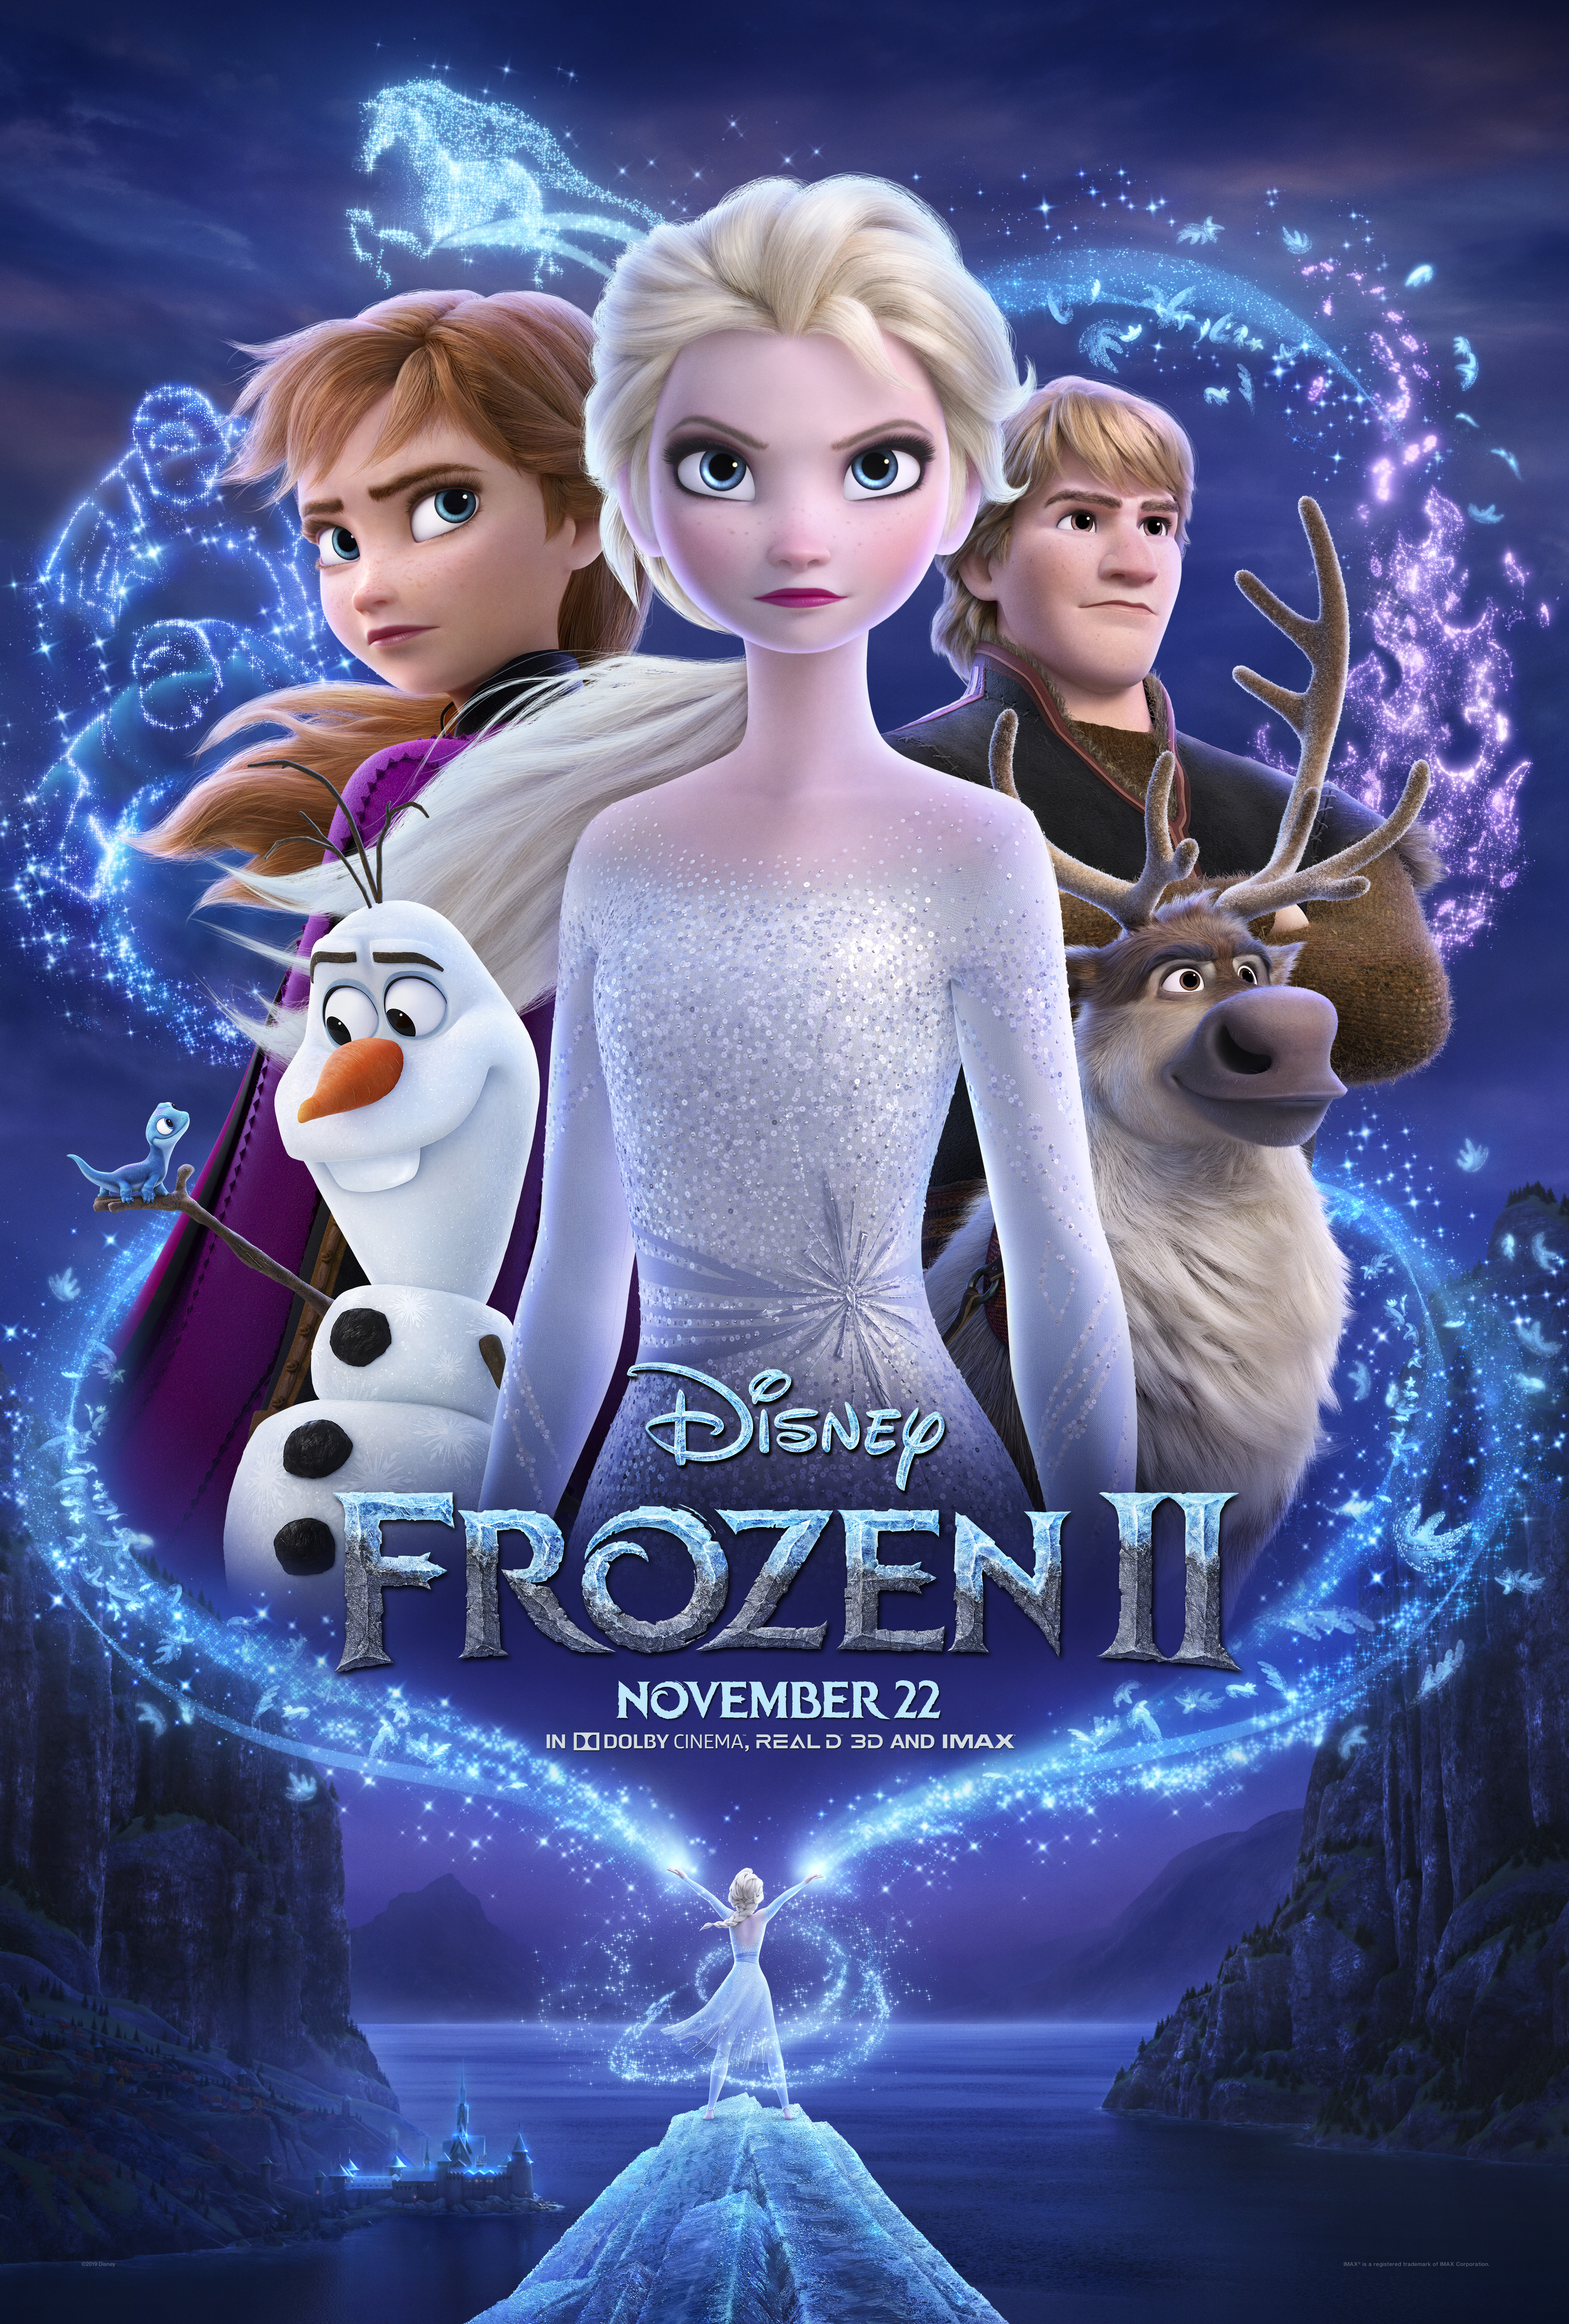 Best Christmas animated movies - Frozen II